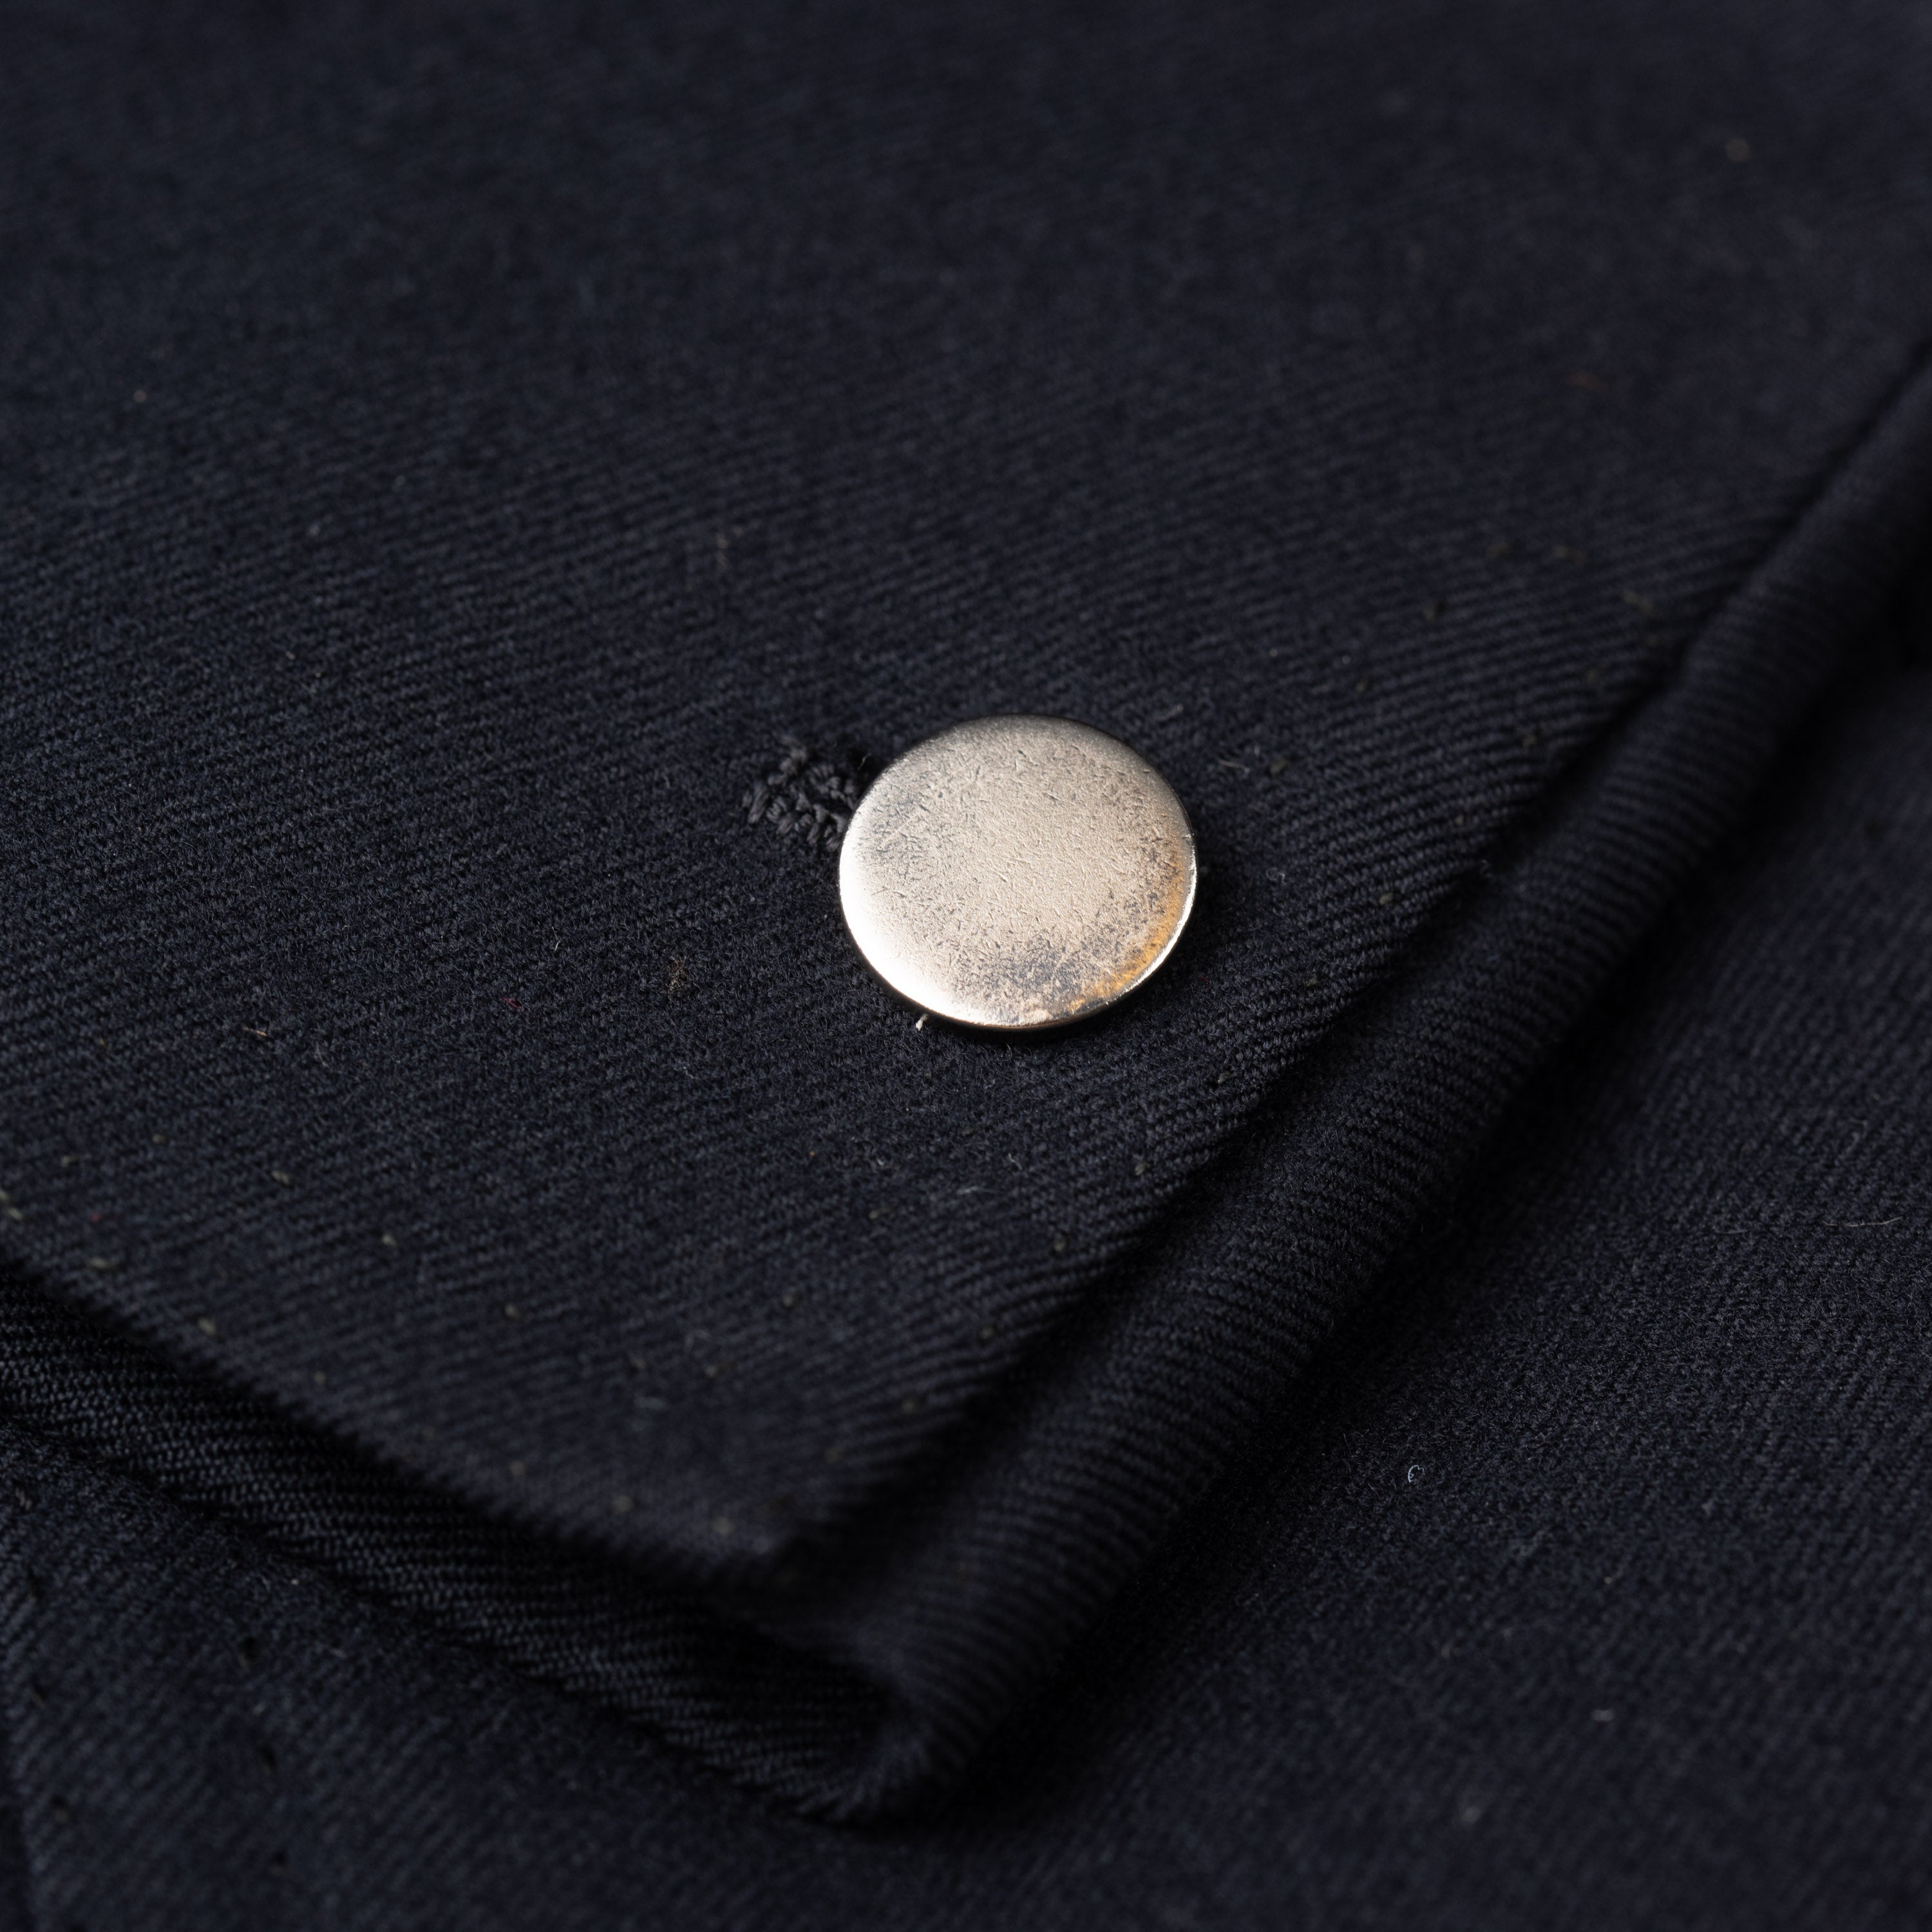 RUBINACCI LH Handmade Bespoke Dark Blue Wool-Cashmere Blazer Jacket 54 US 42 44 RUBINACCI